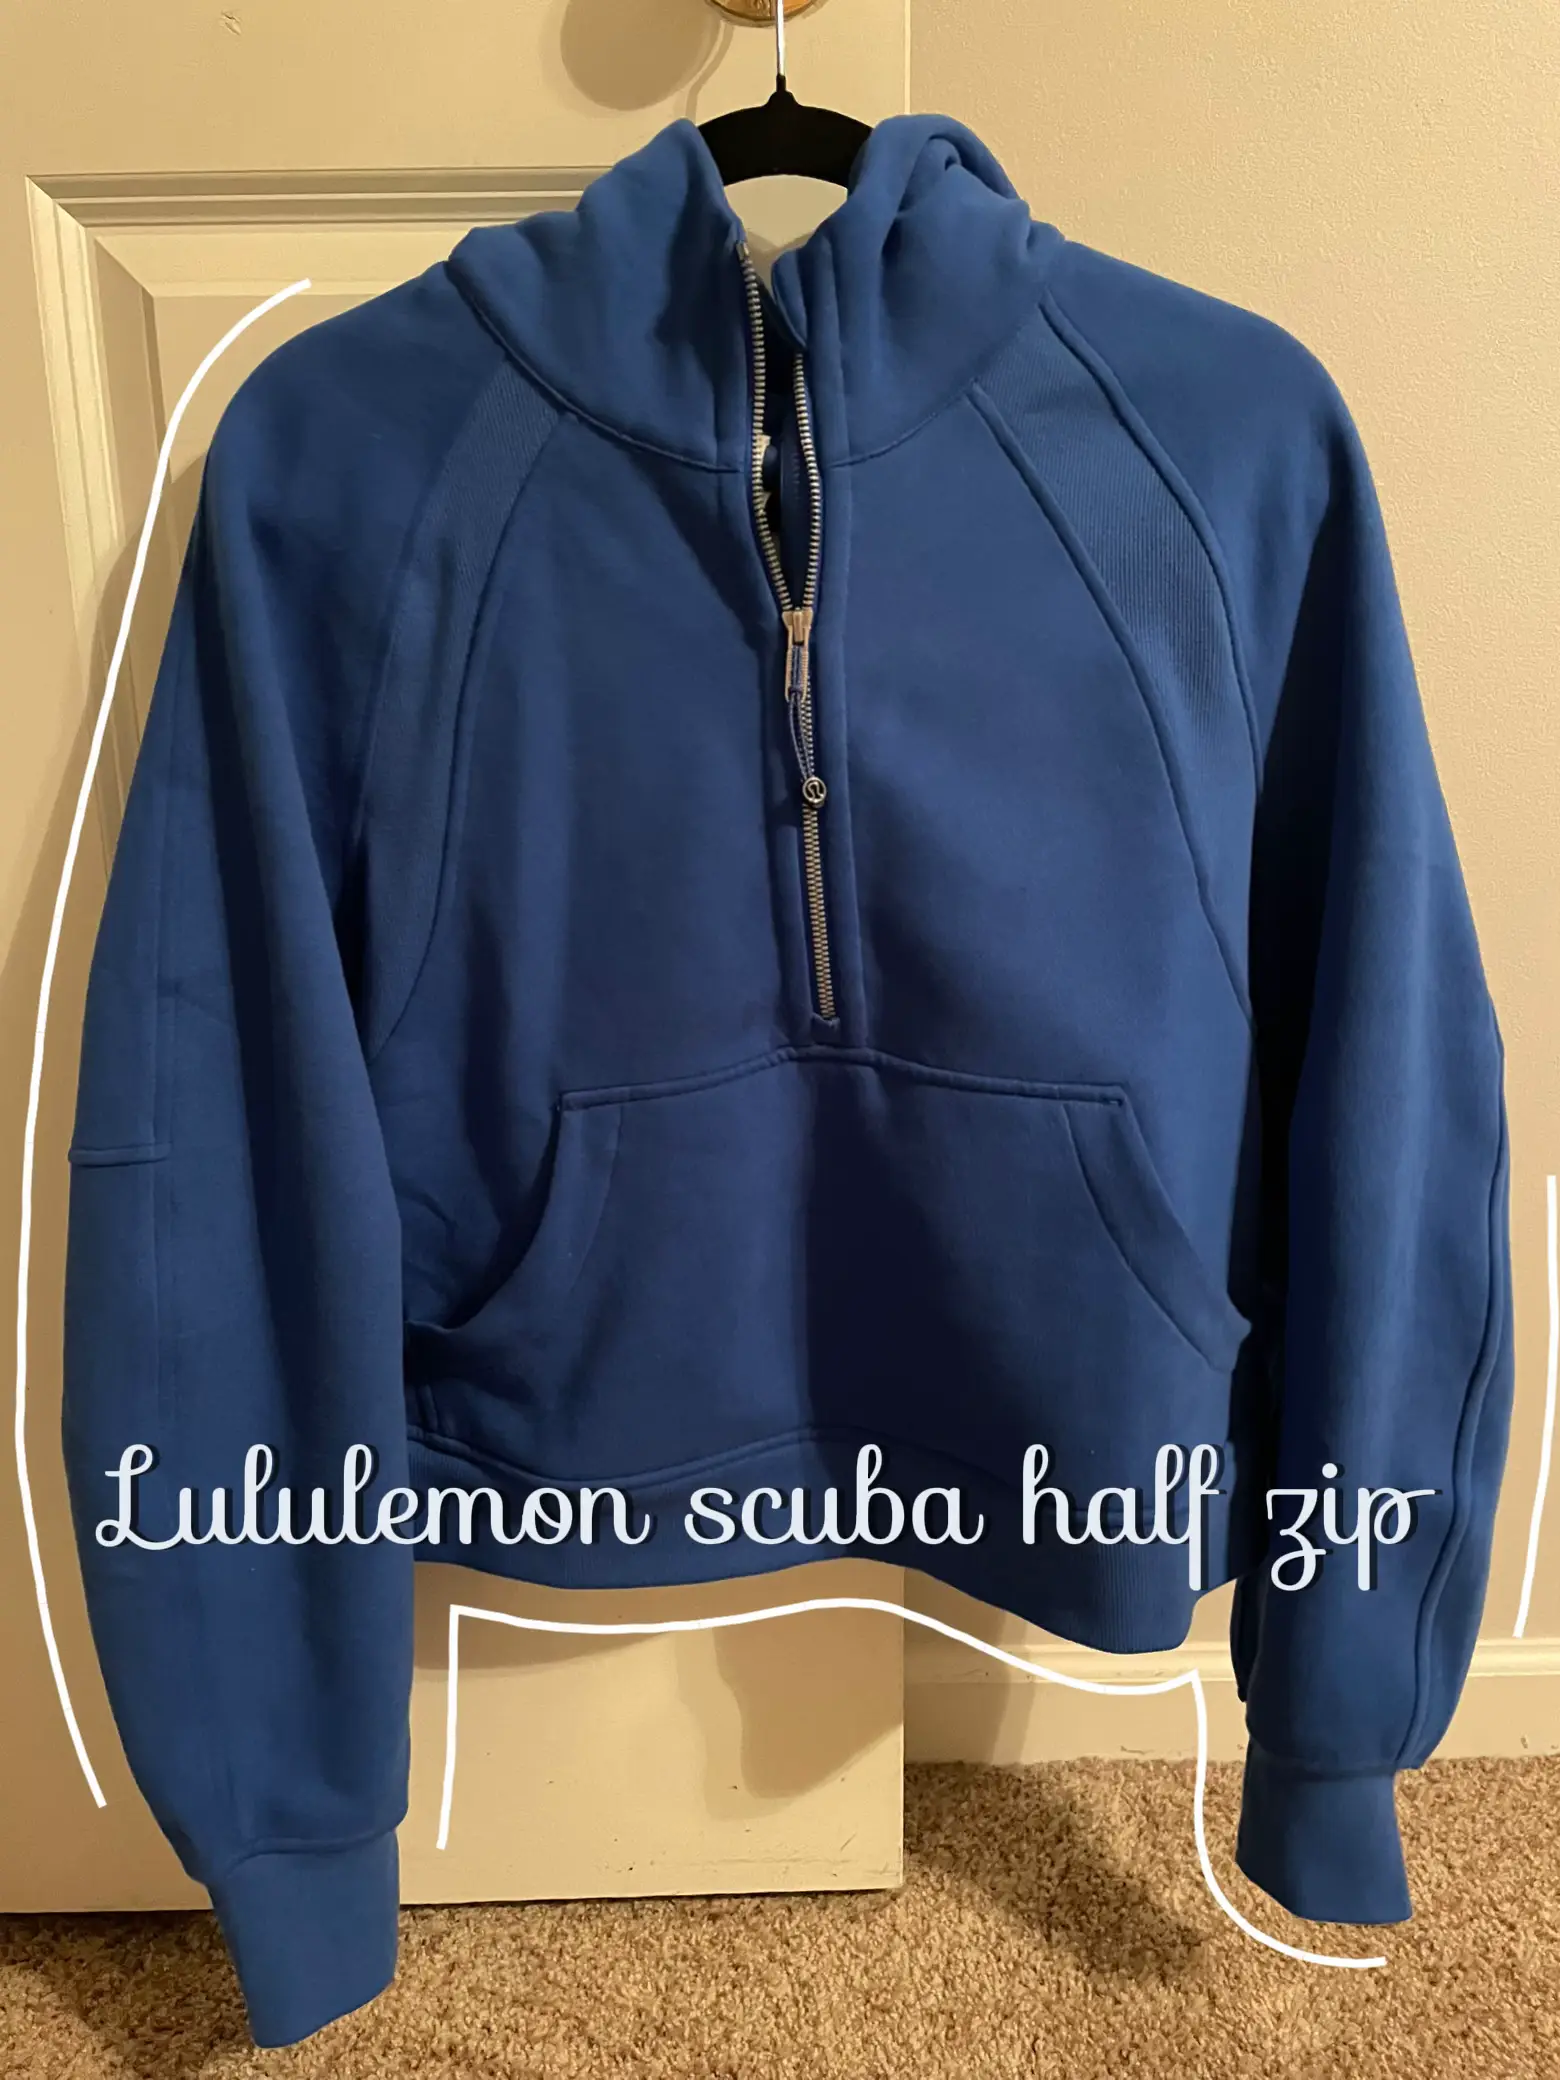 Lululemon Scuba - Lemon8 Search